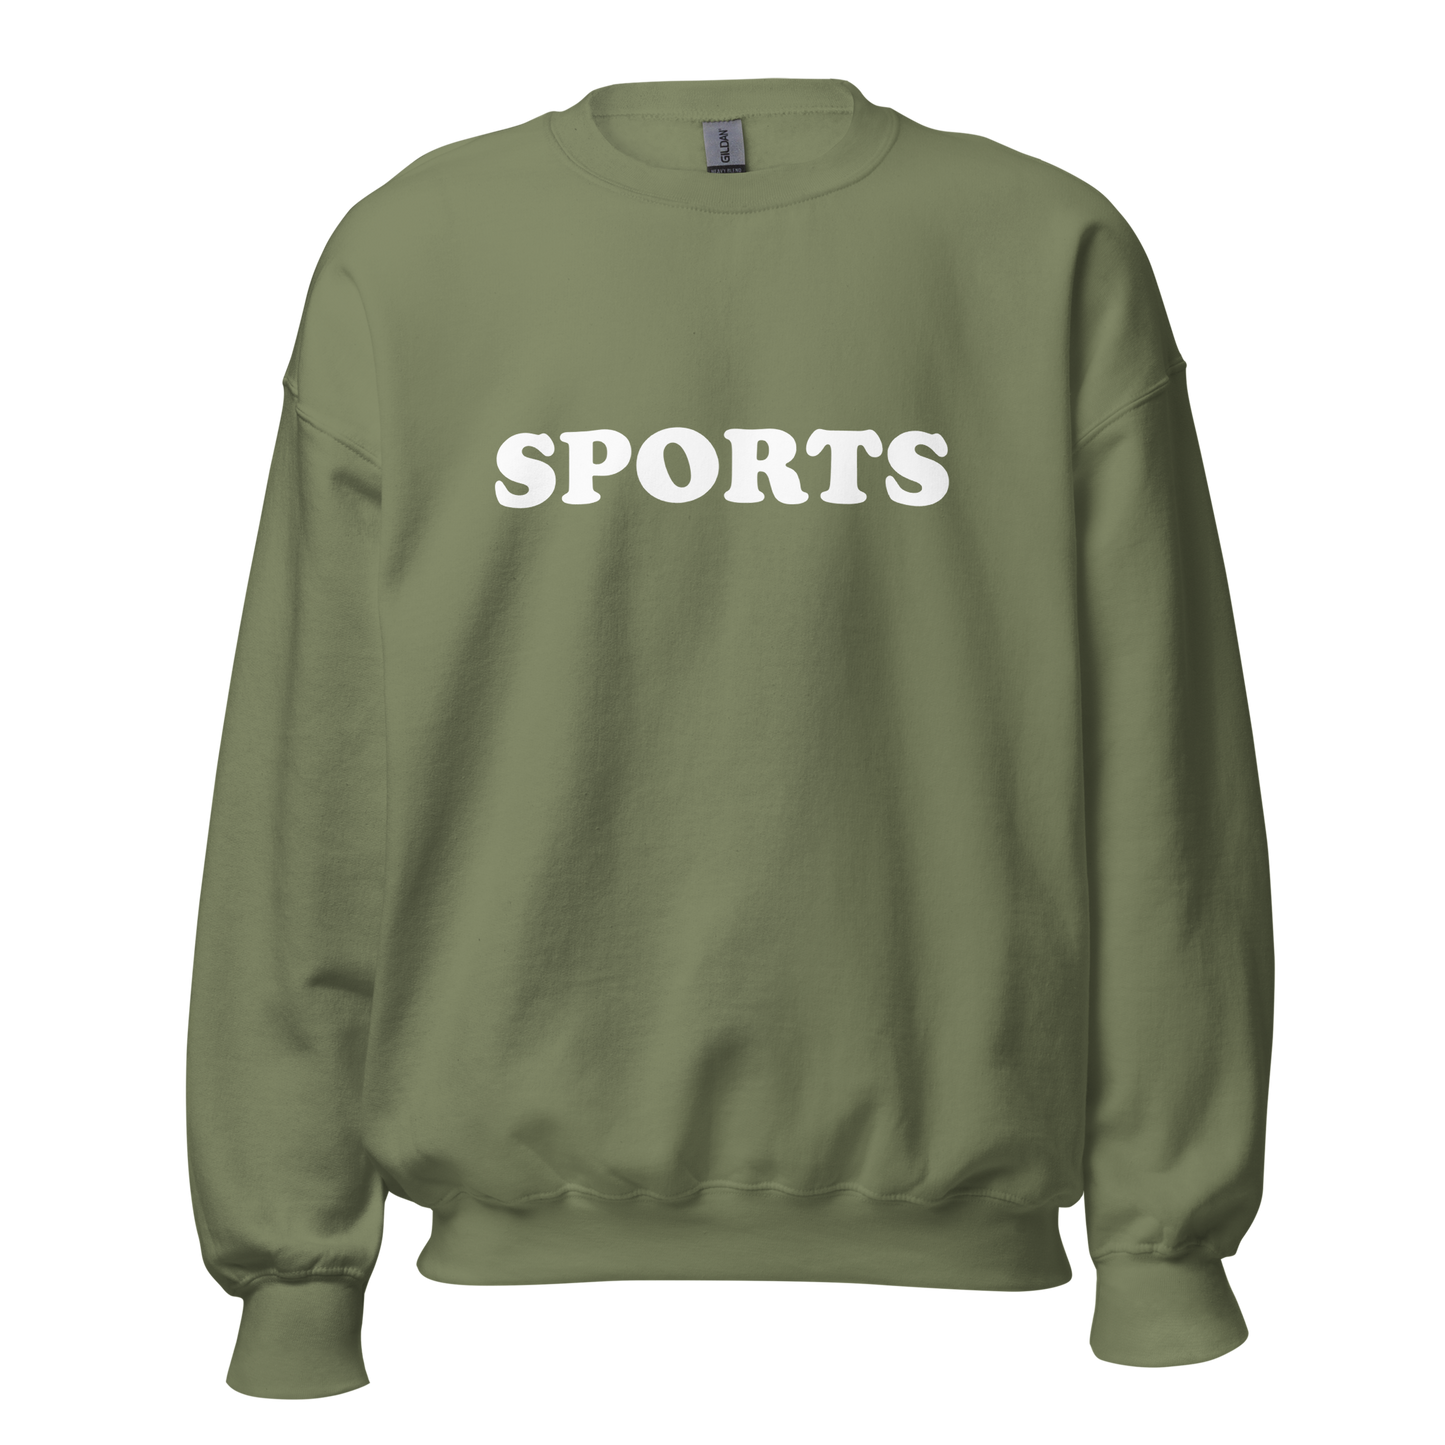 SPORTS Sweatshirt